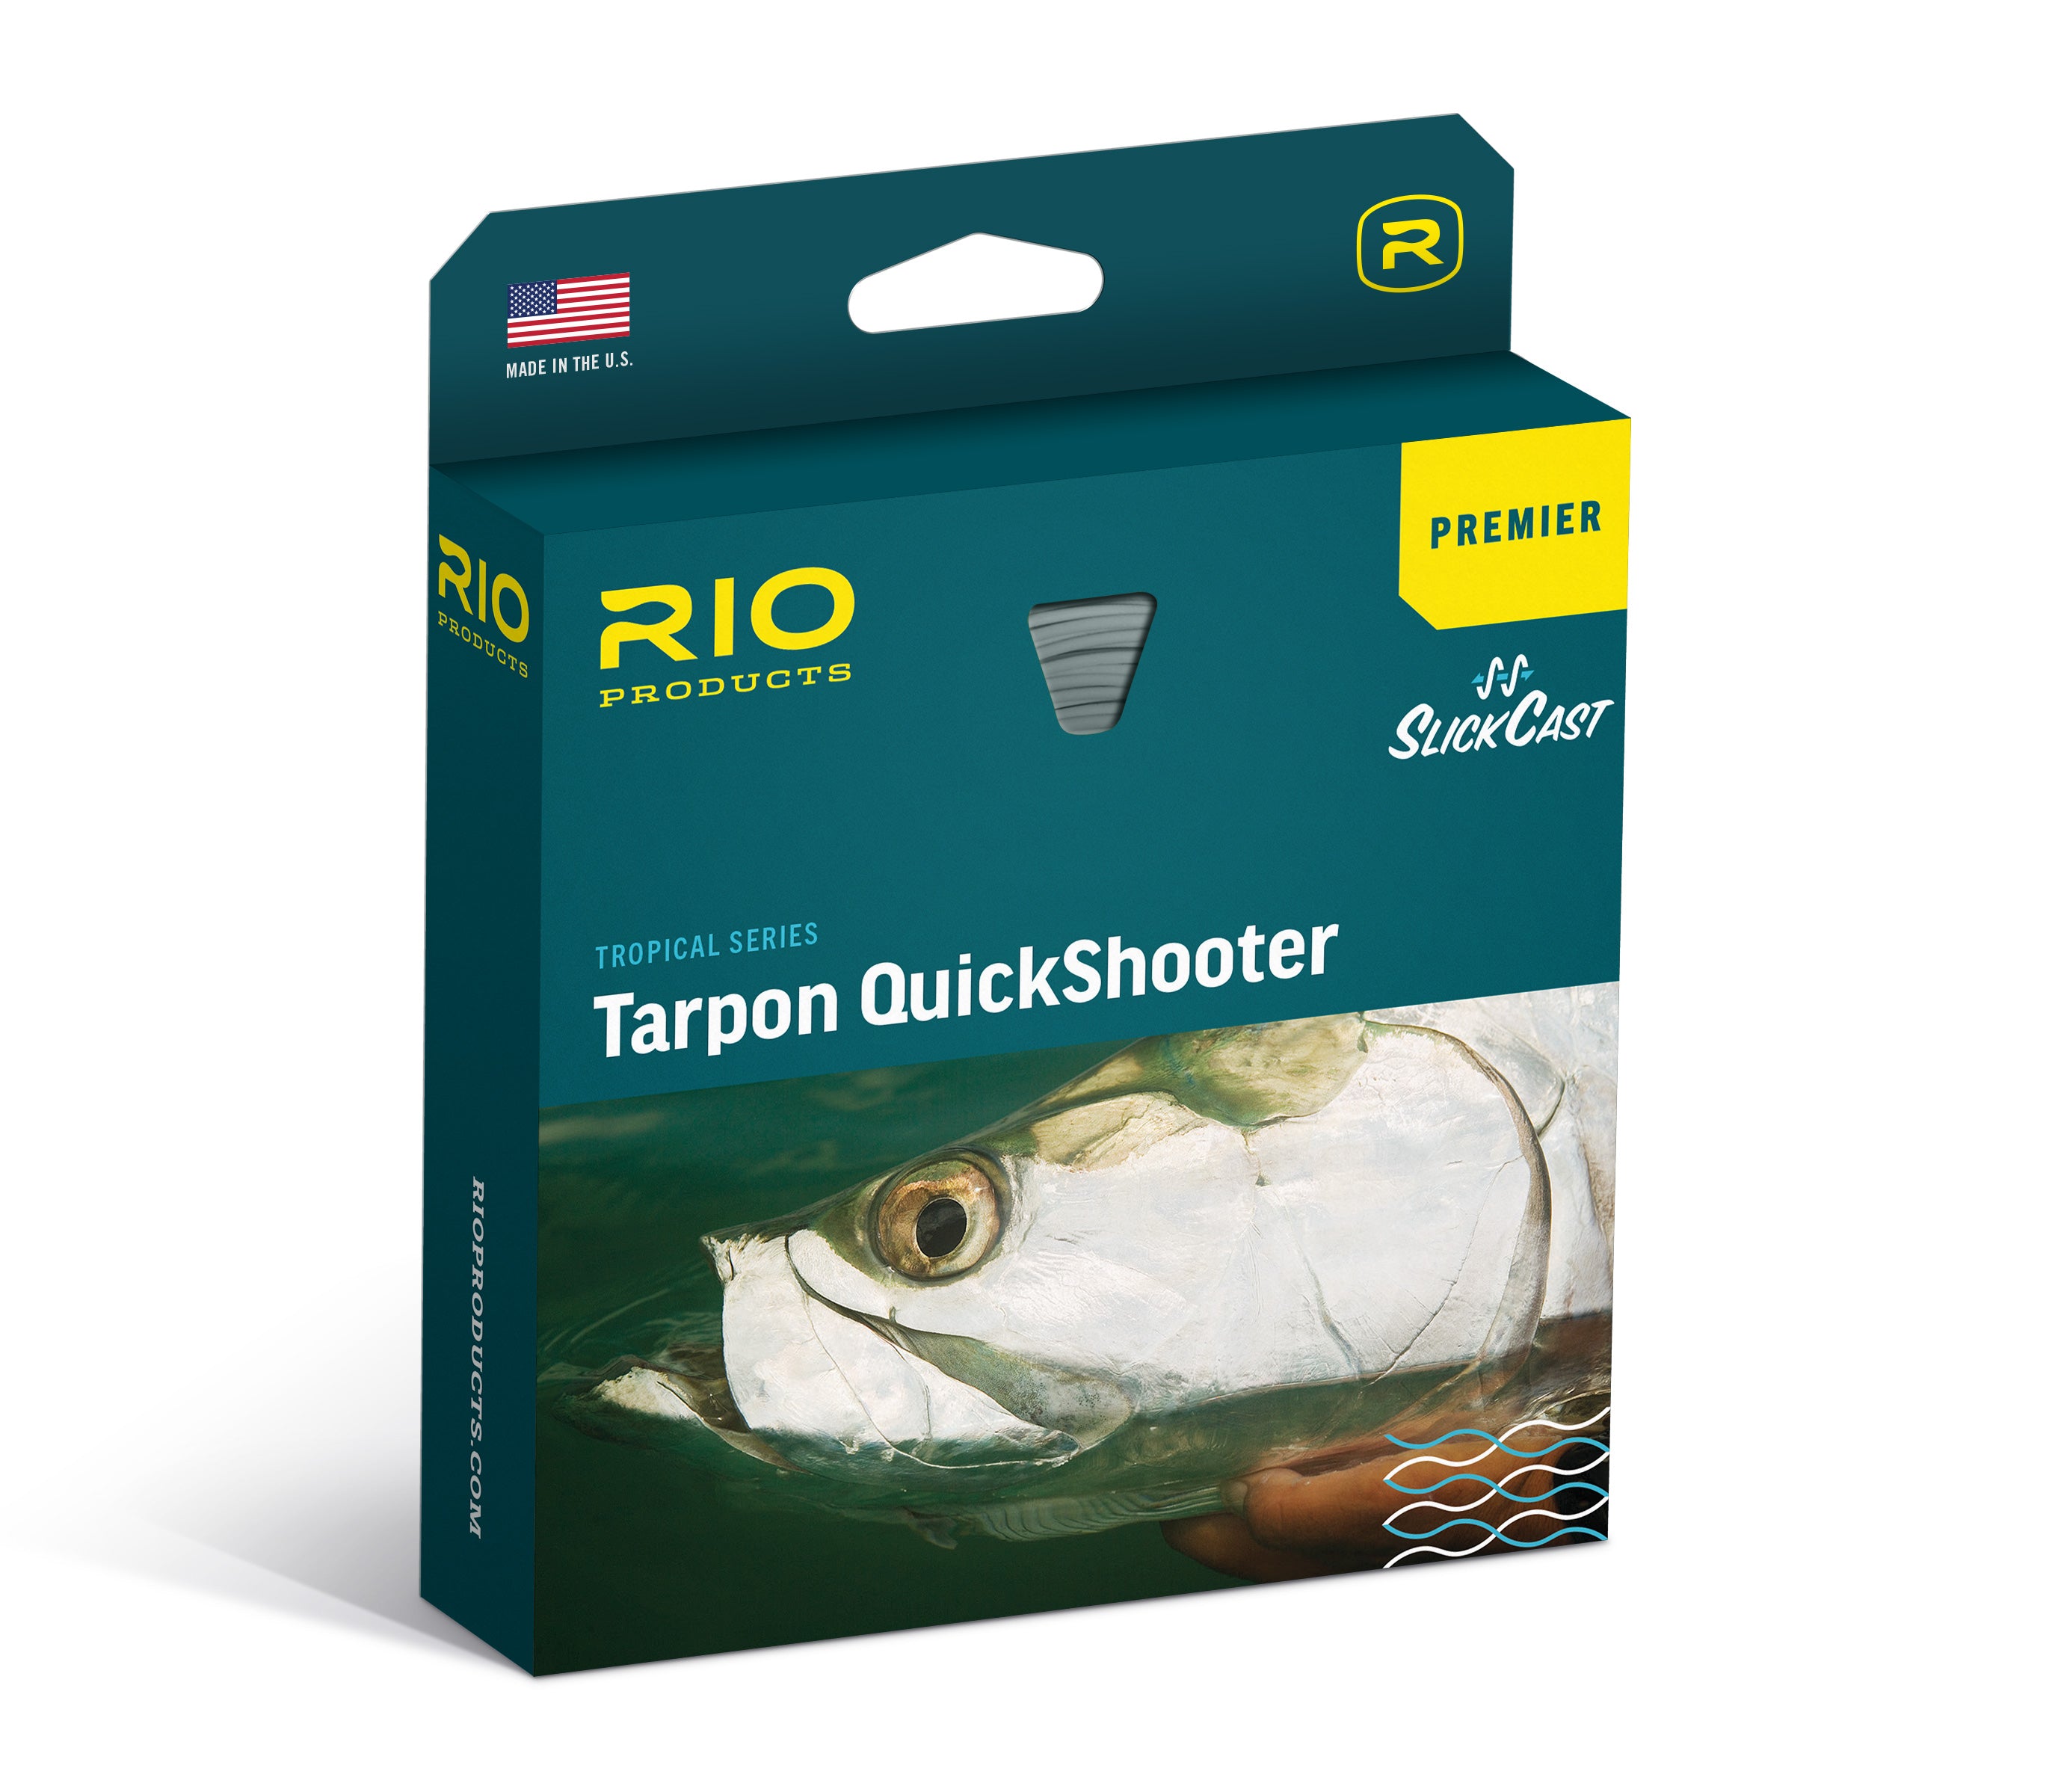 Rio Premier Tarpon Clear Tip Floater - WF12F